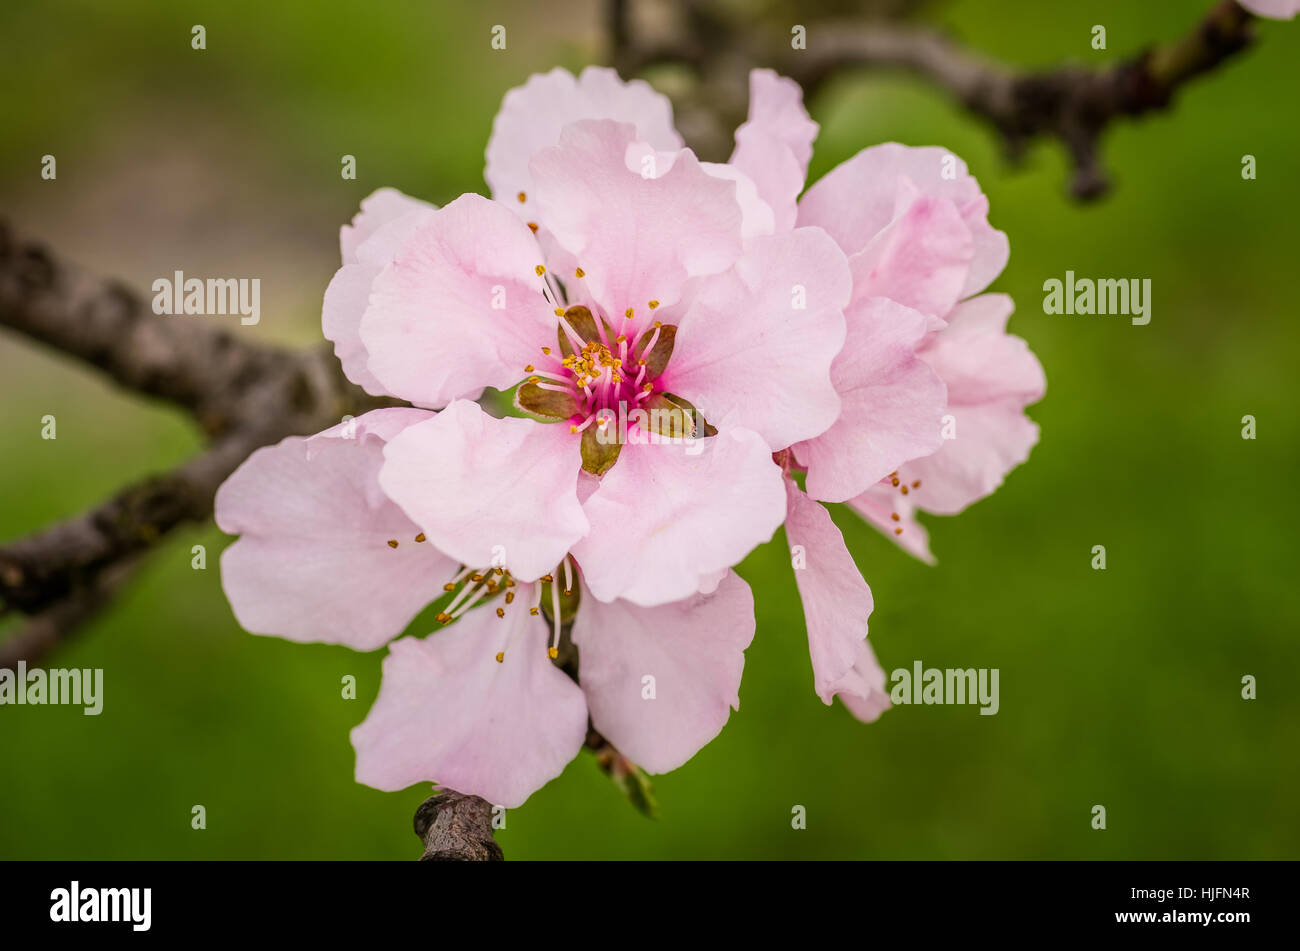 bloom, blossom, flourish, flourishing, spring, pfalz, almond-blossom, almond Stock Photo